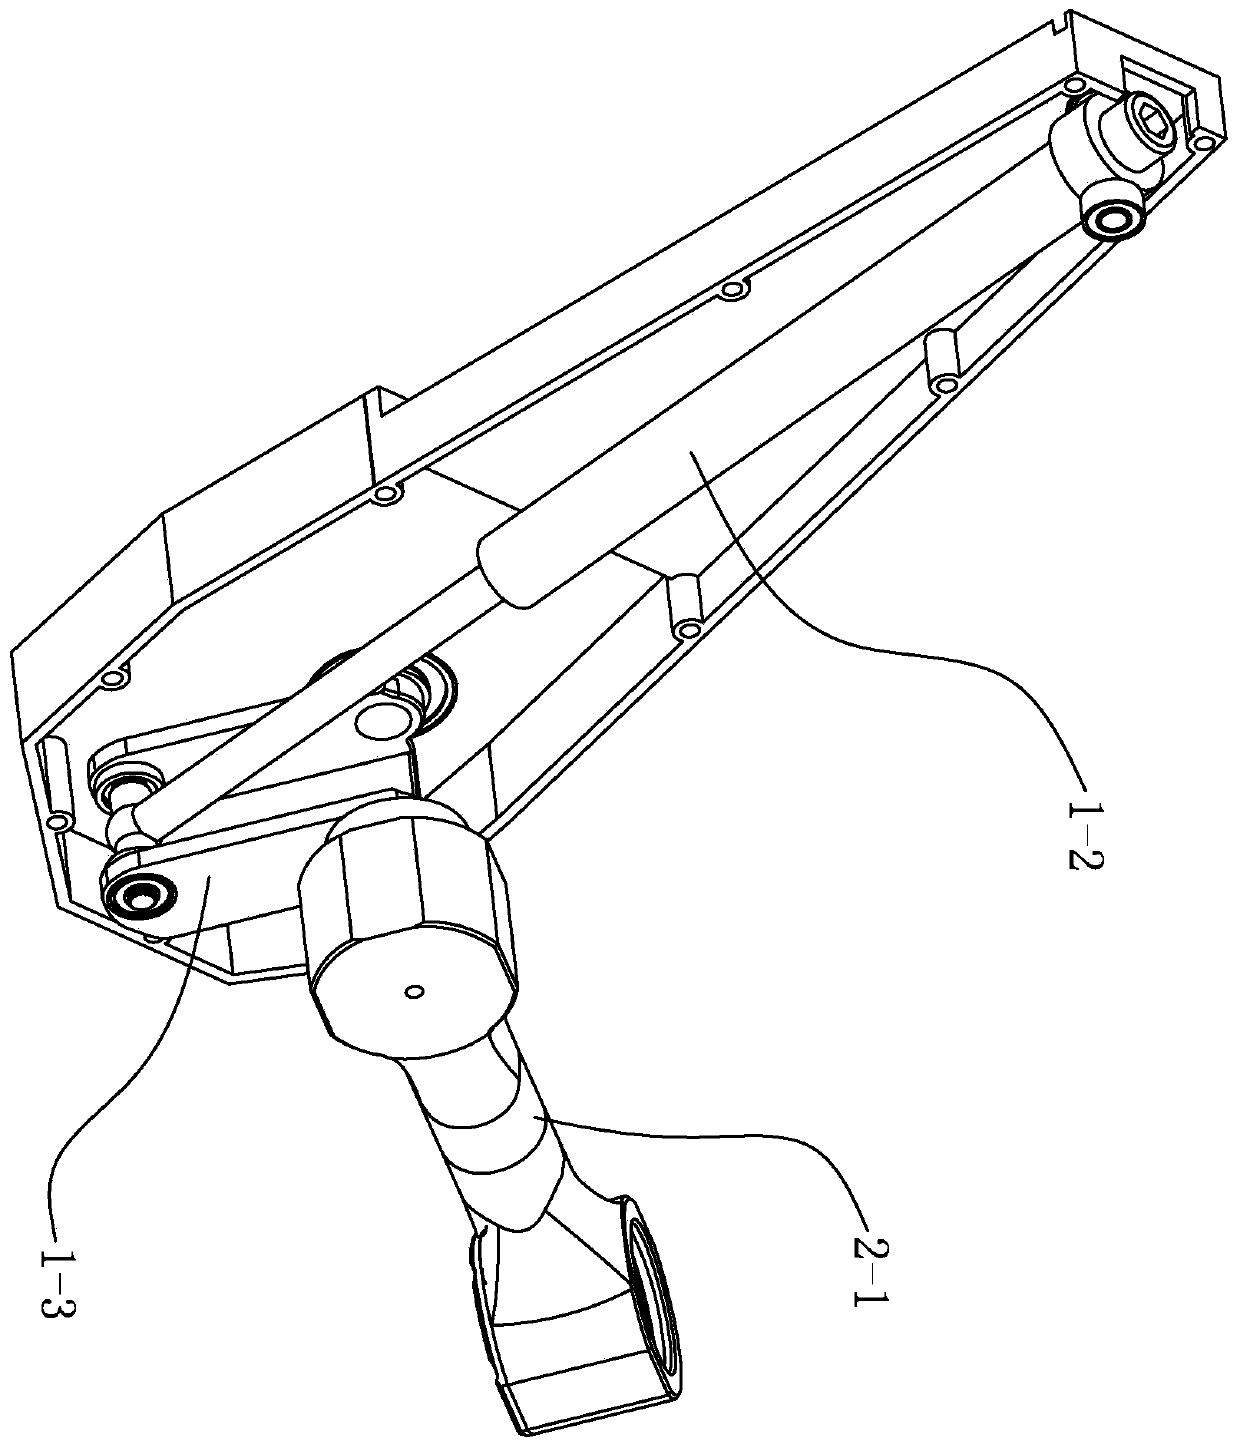 Air spring energy storage passive type upper limb power assisting exoskeleton